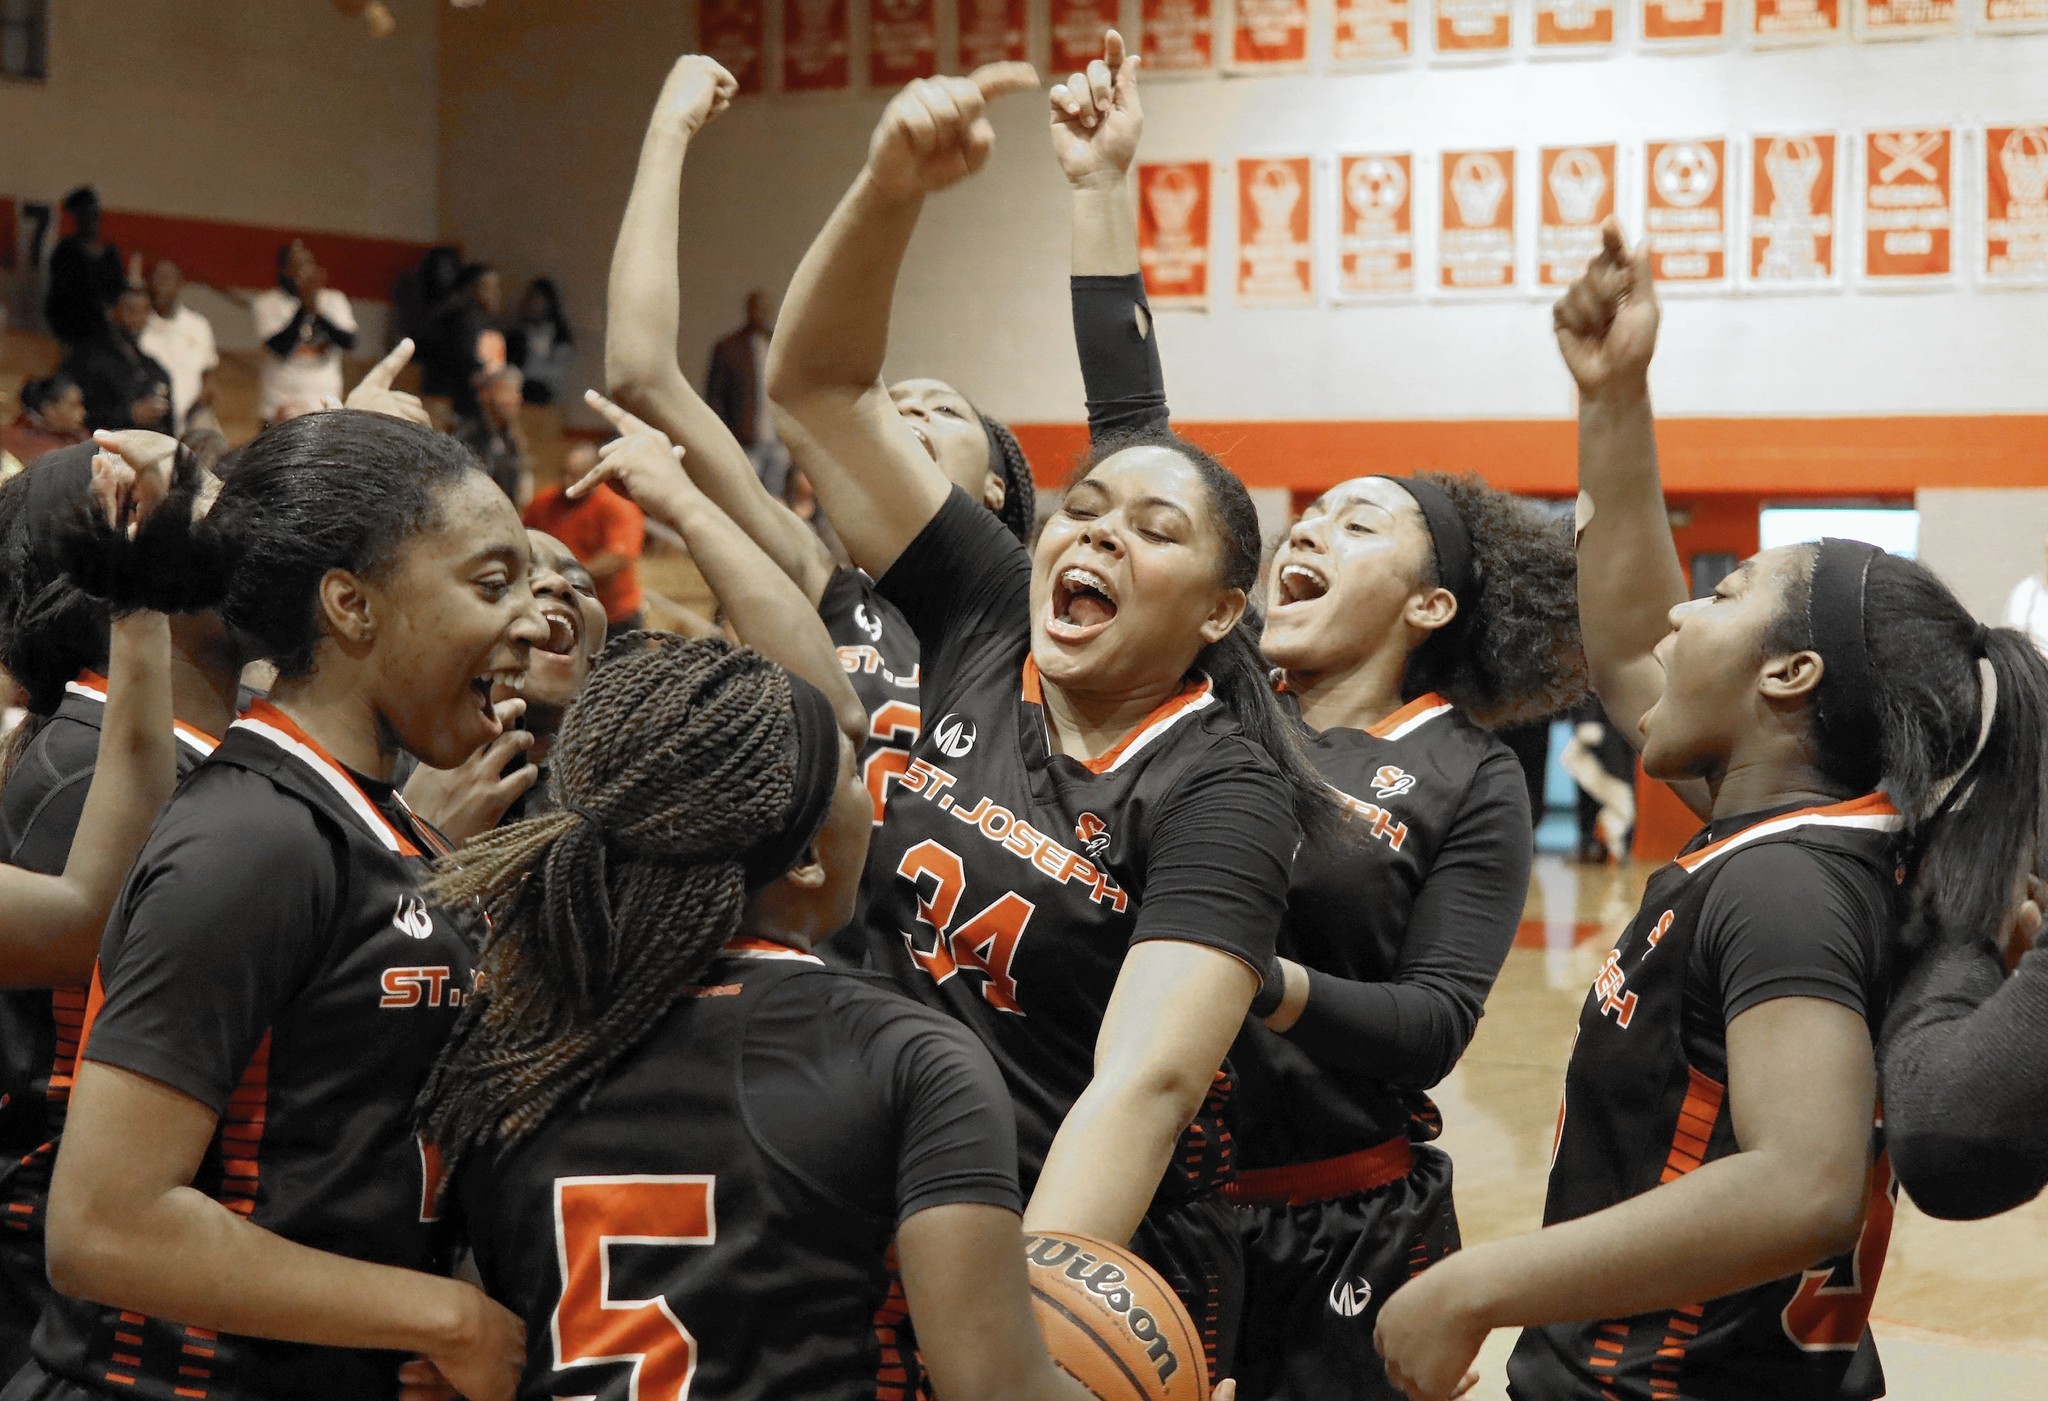 Girls basketball: St. Joseph knocks out Fenwick in 3A regional final - Chicago Tribune